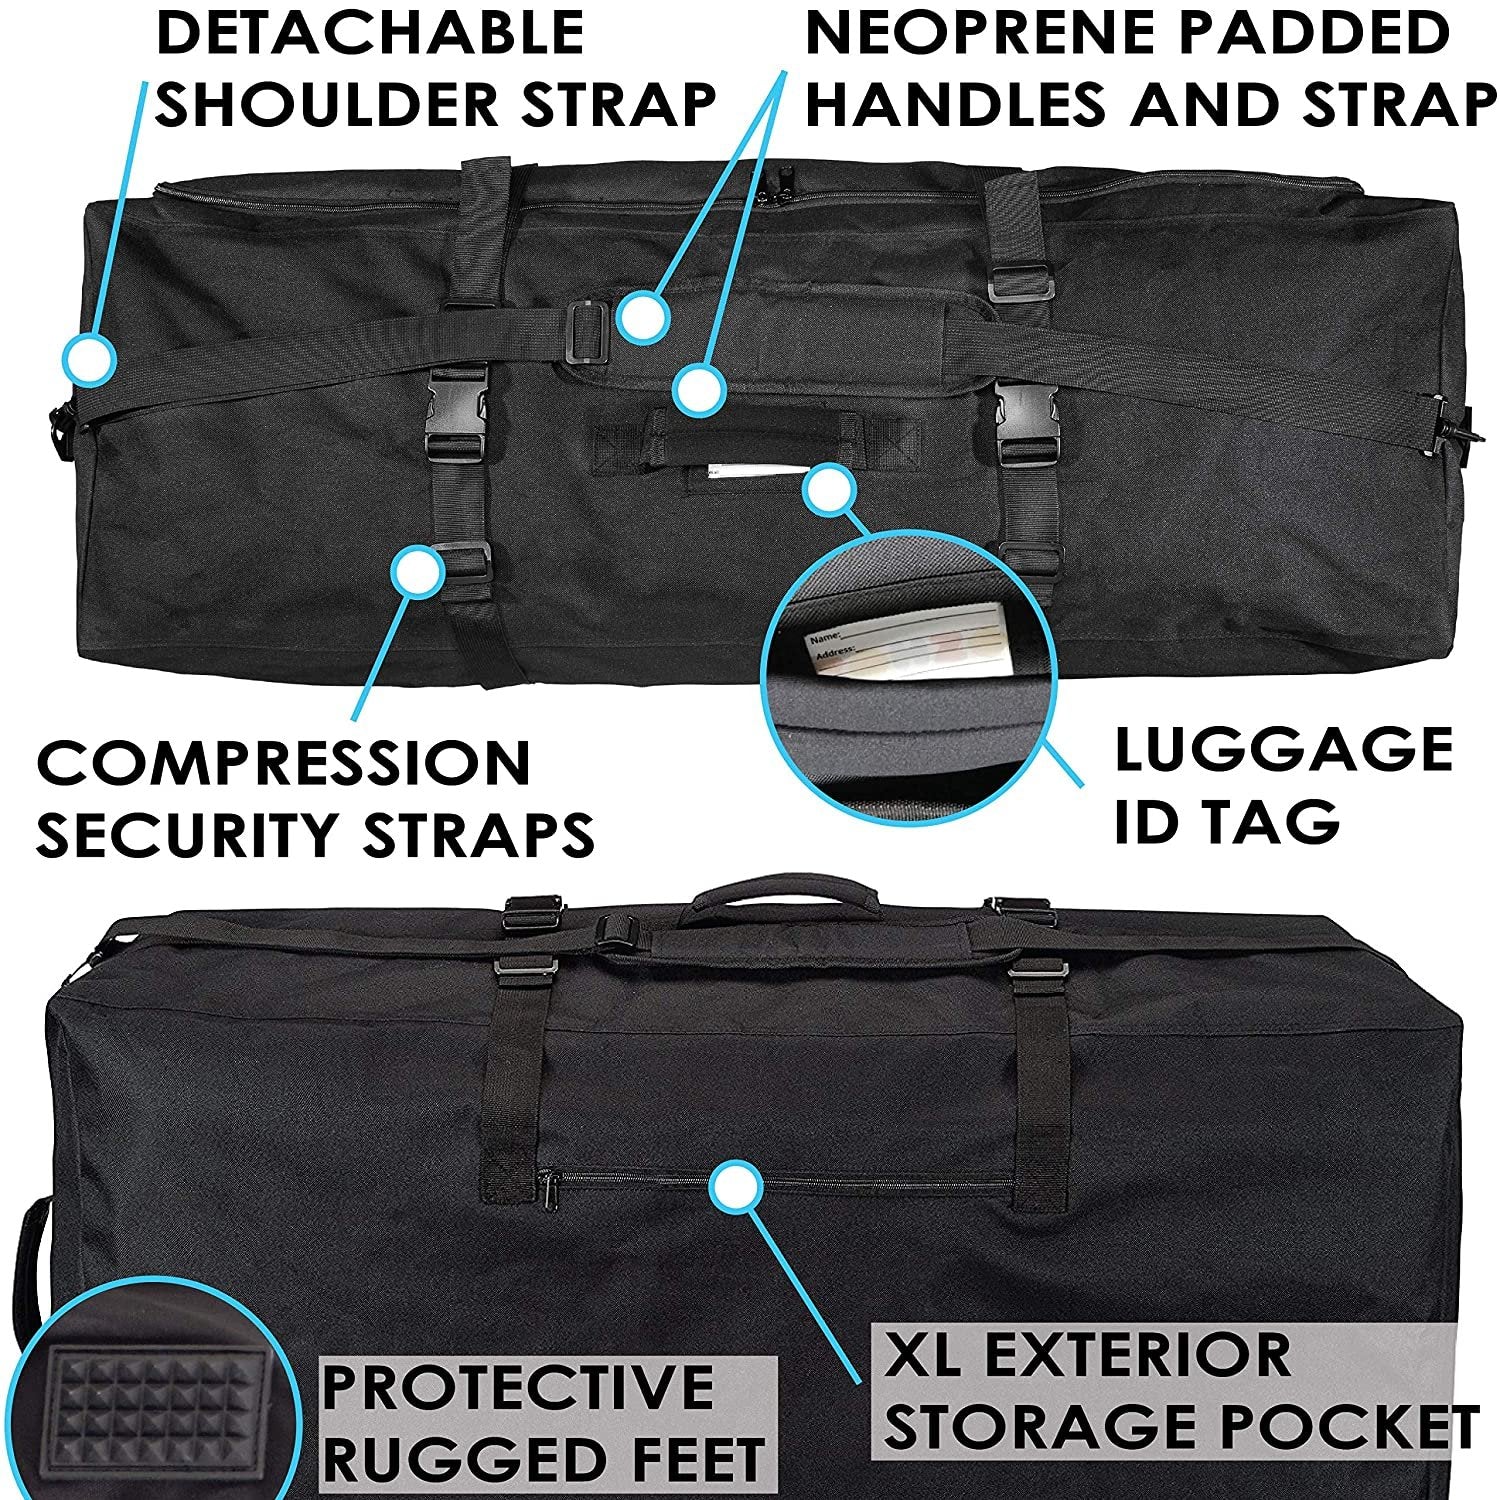 Zohzo Stroller Travel Bag | Black | Standard/Double | 41x21x13.5 Inch | Free Shipping/Returns